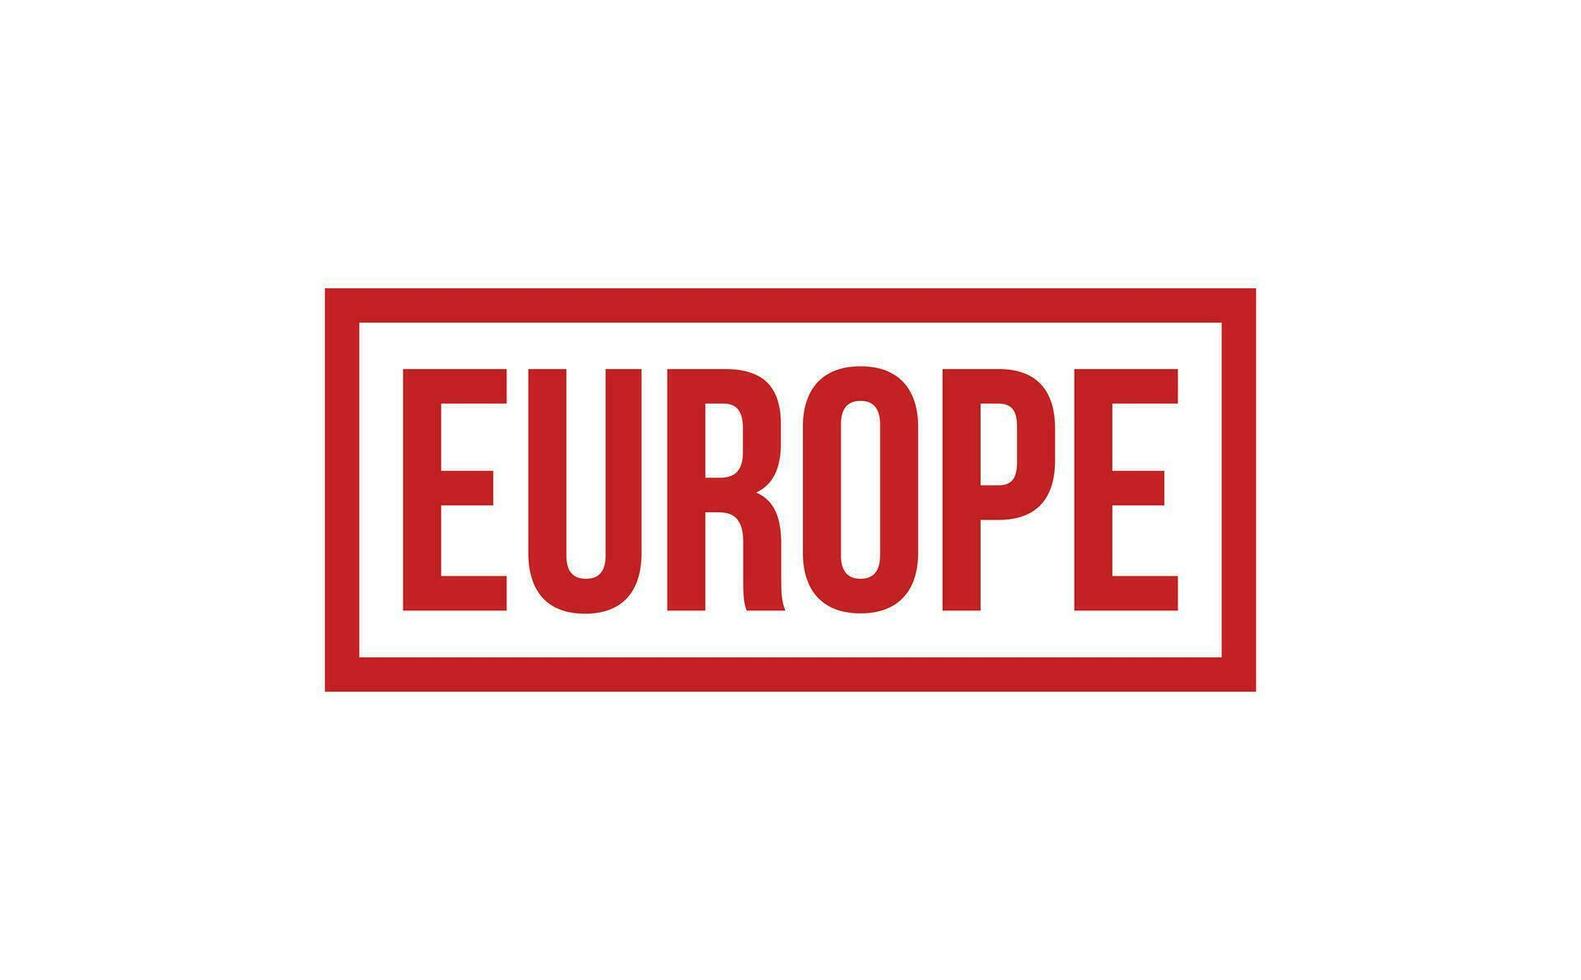 Europa Gummi Briefmarke Siegel Vektor